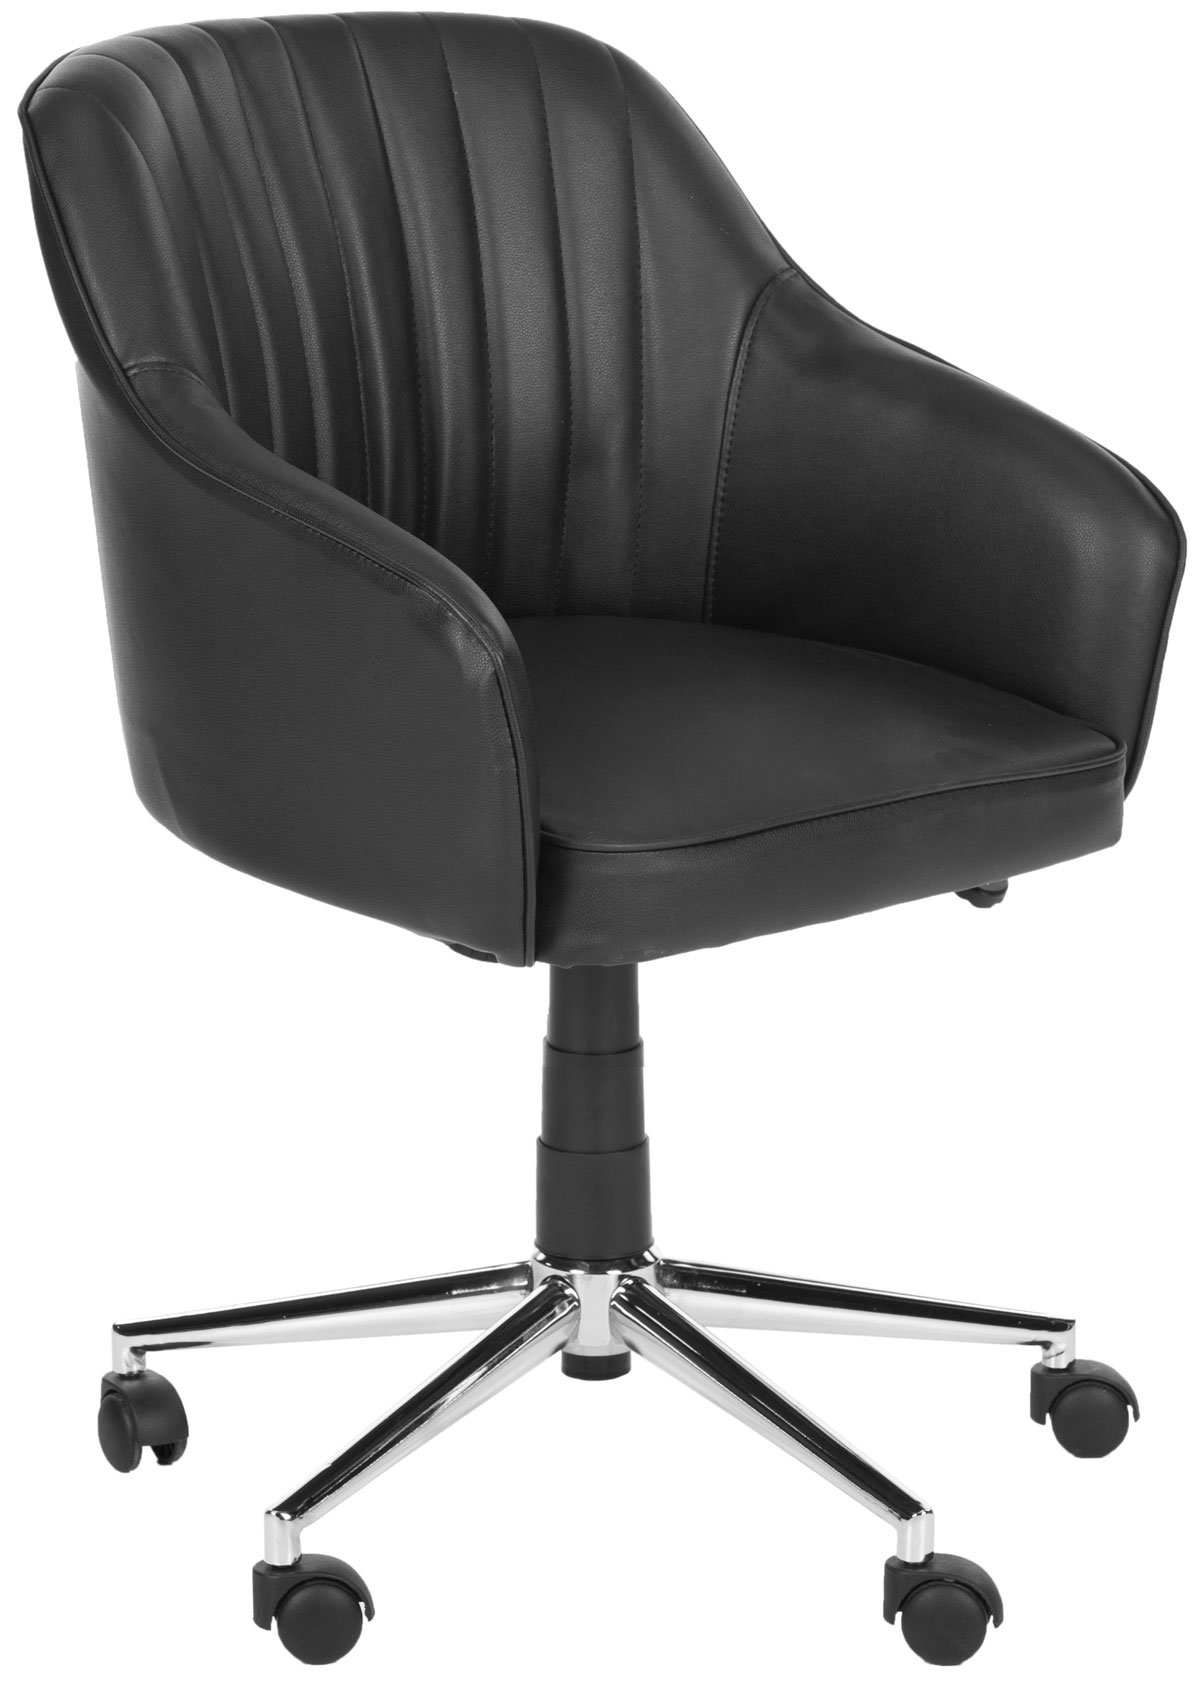 Hilda Desk Chair - Black/Silver - Arlo Home - Image 0